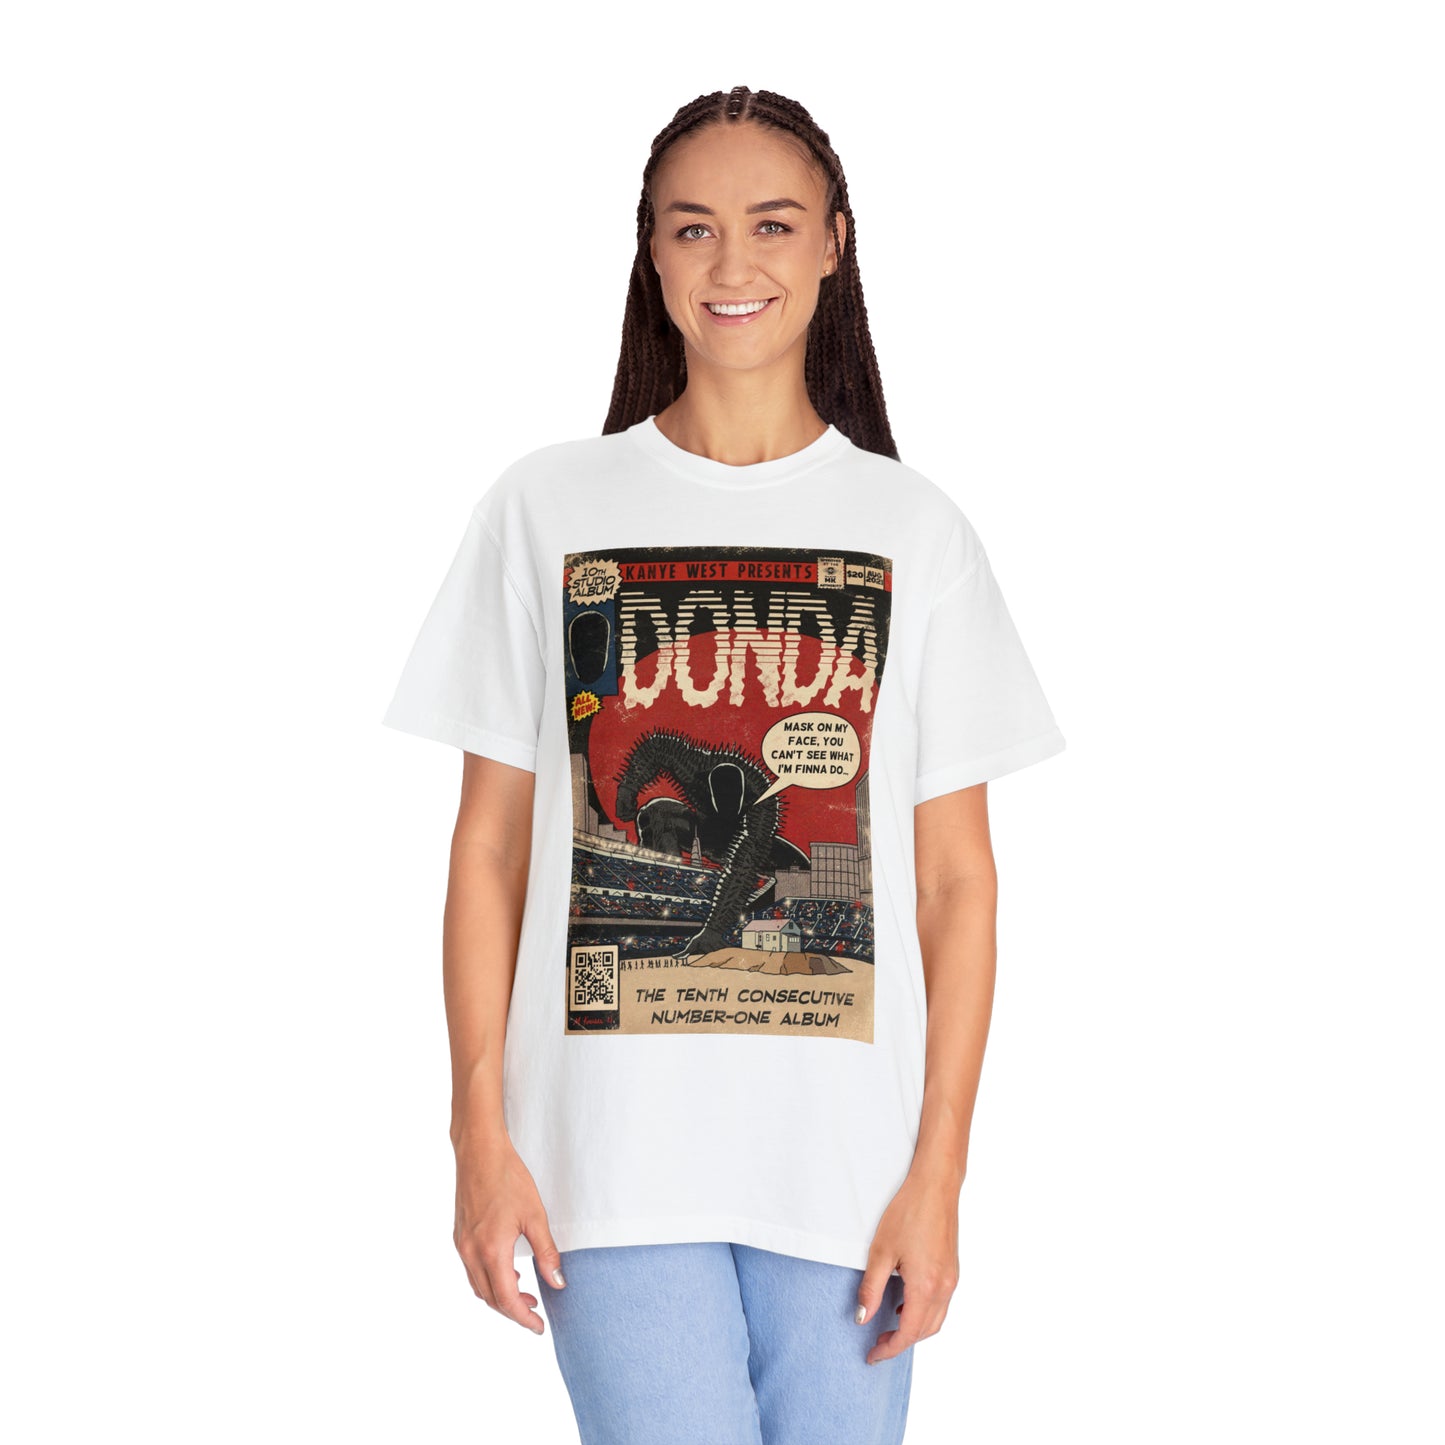 Kanye West - DONDA - Unisex Comfort Colors T-shirt